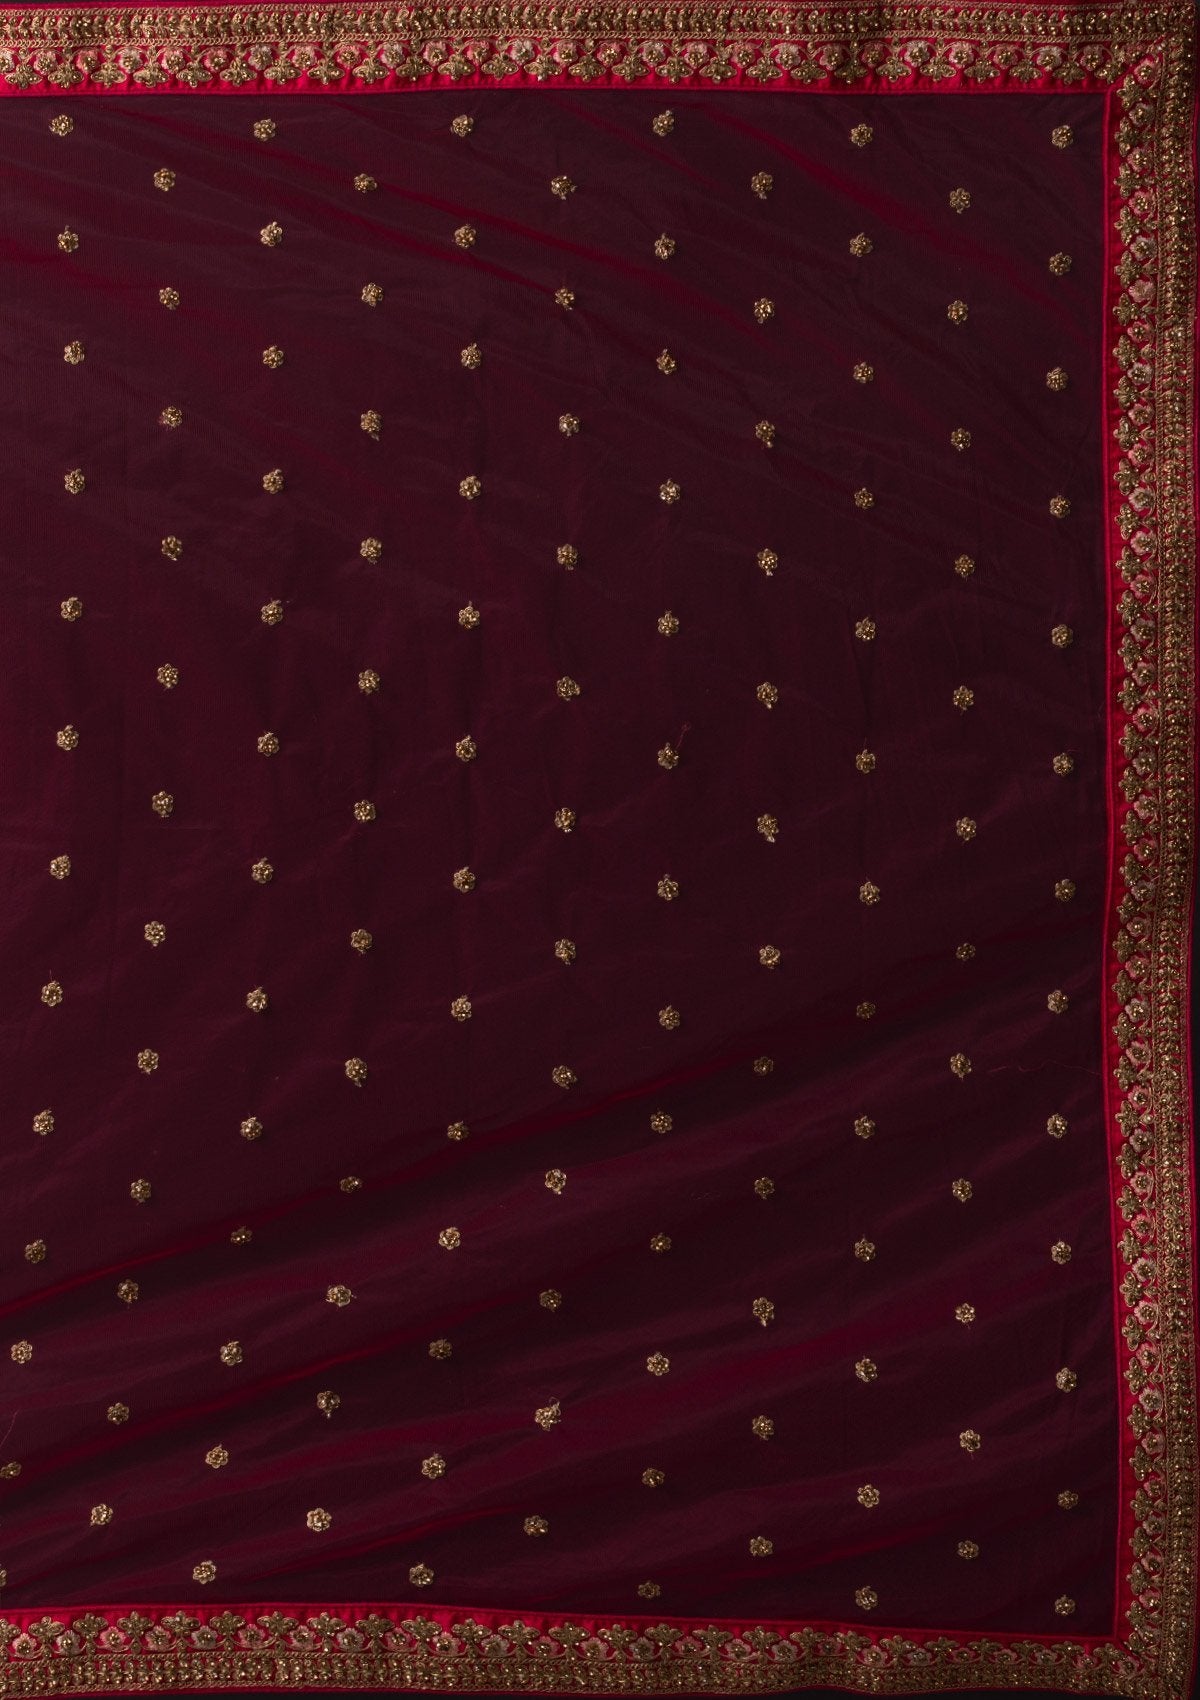 Rani Pink Stonework Raw Silk Designer Semi-Stitched Lehenga - koskii